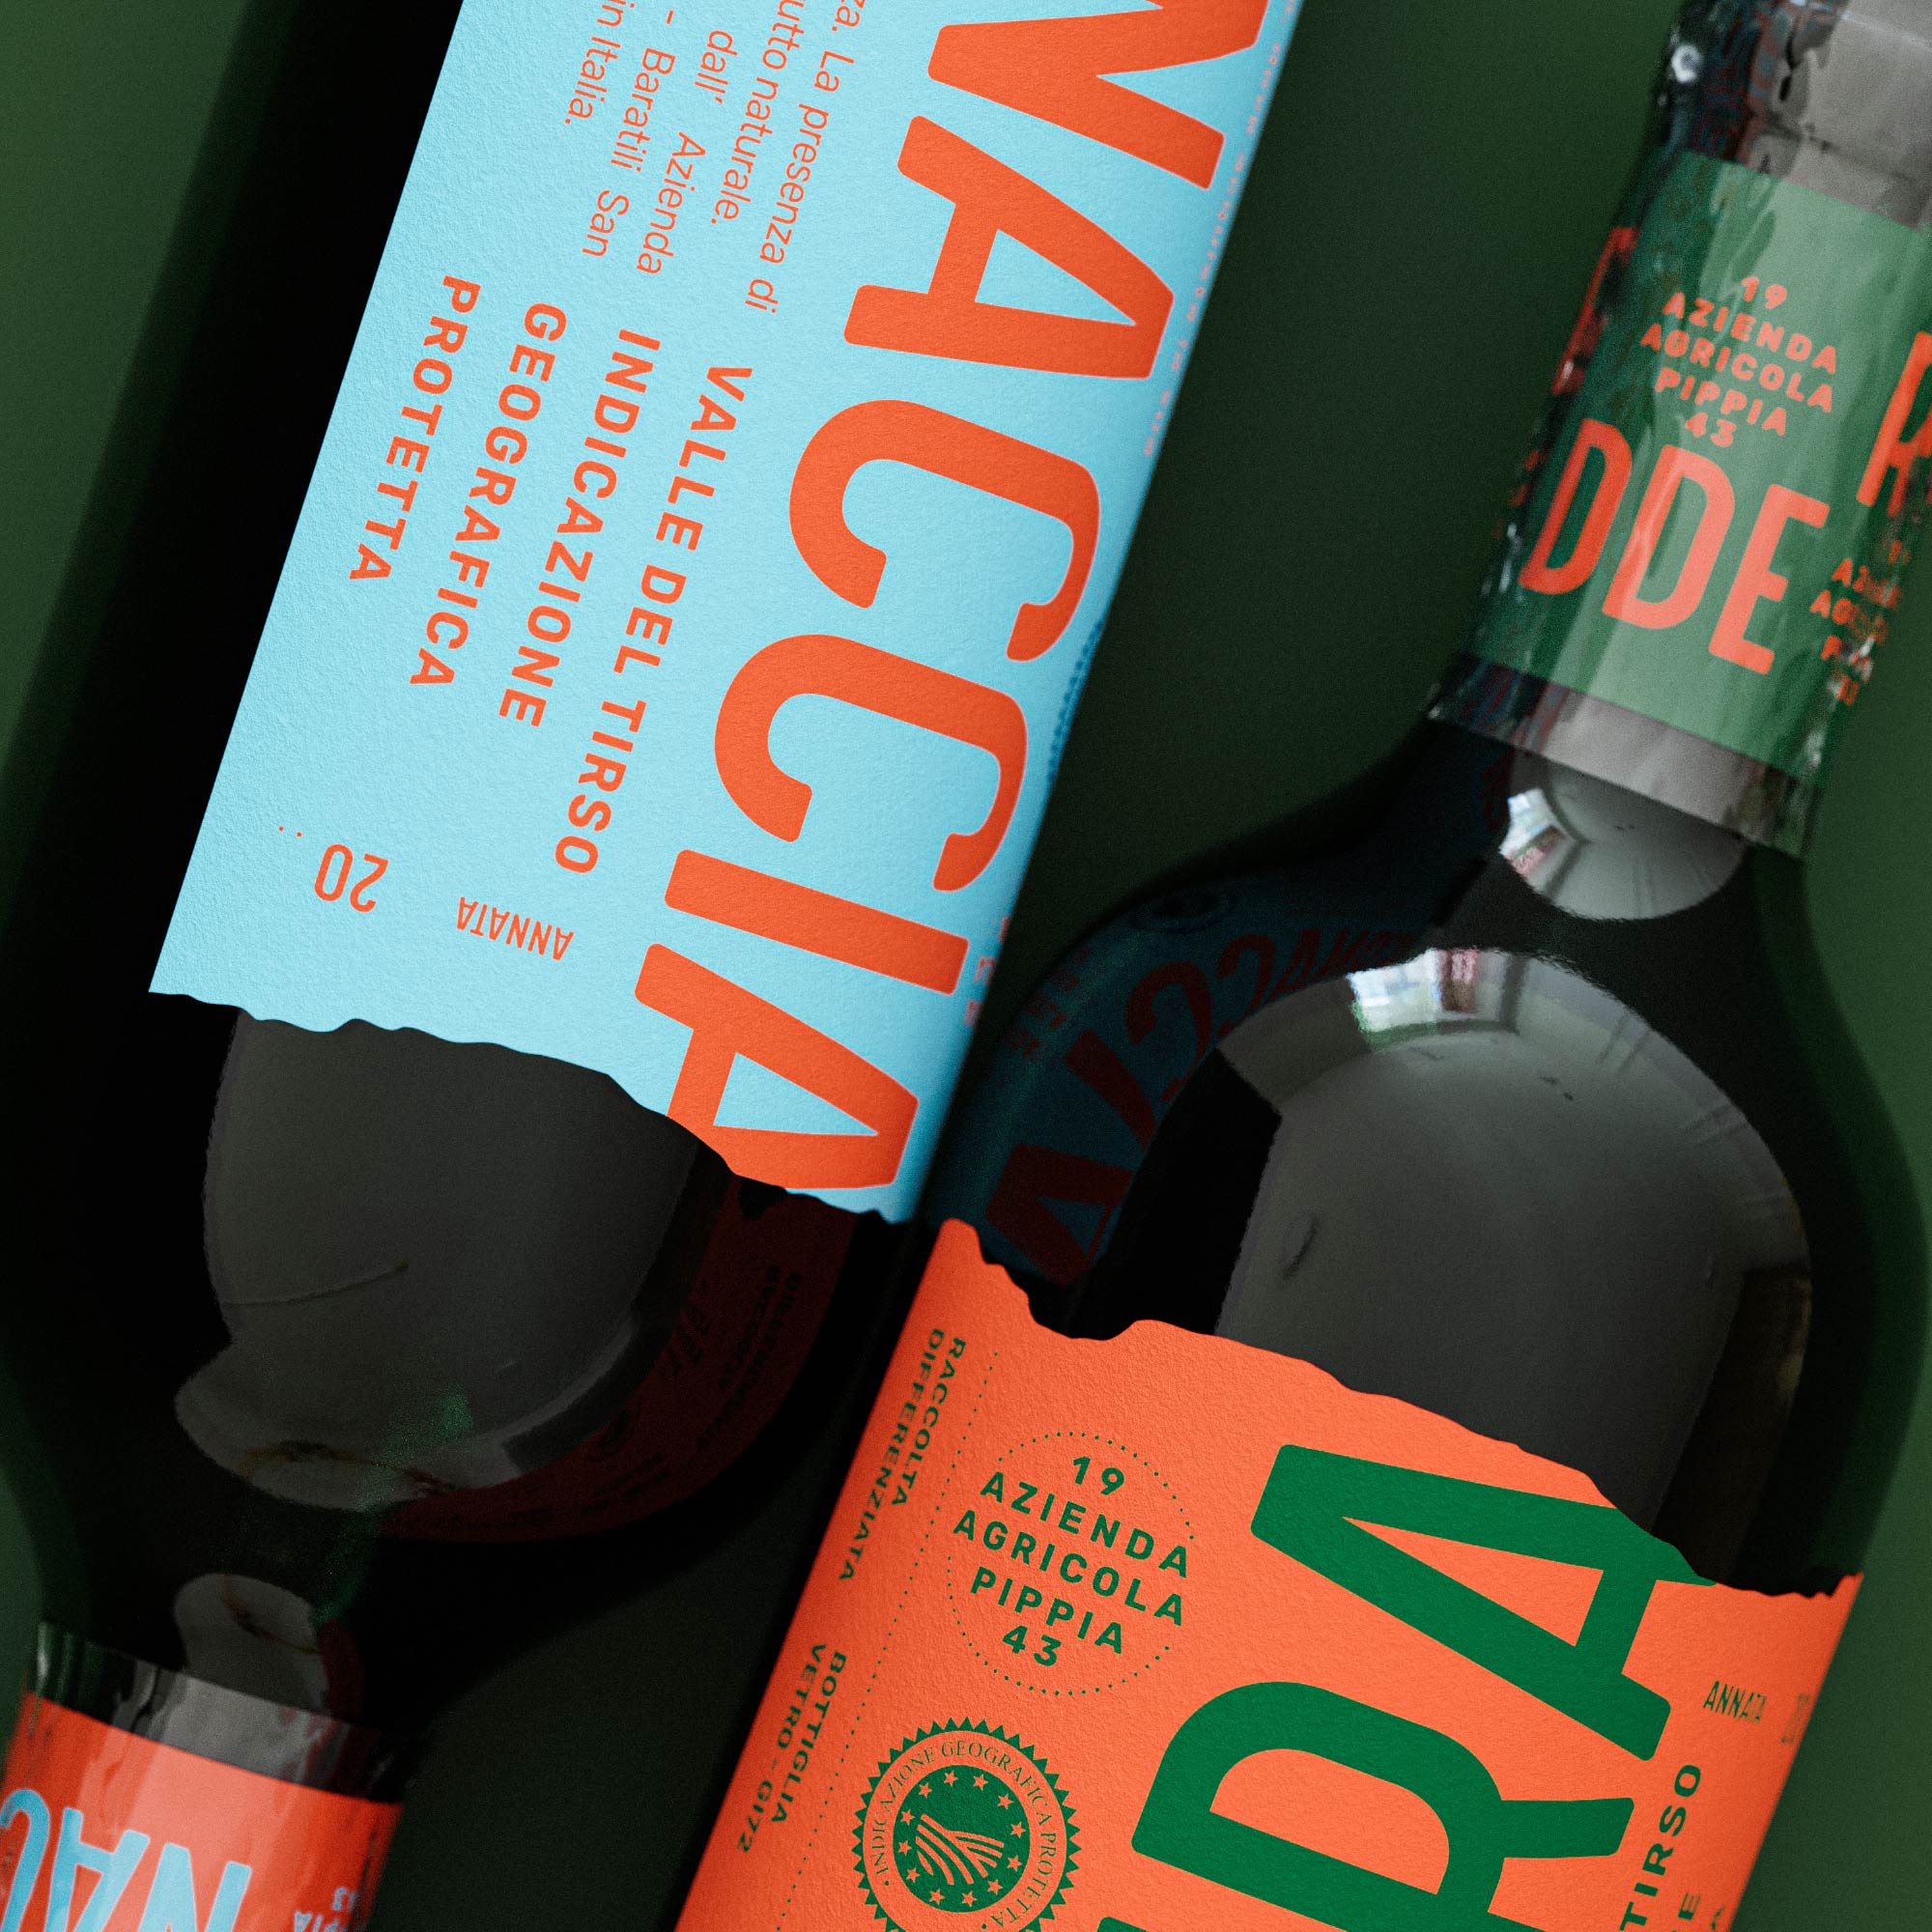 Reviving the Sardinian Aperitif: A Look at Cantina Pippia's Vernaccia Wine Packaging Design